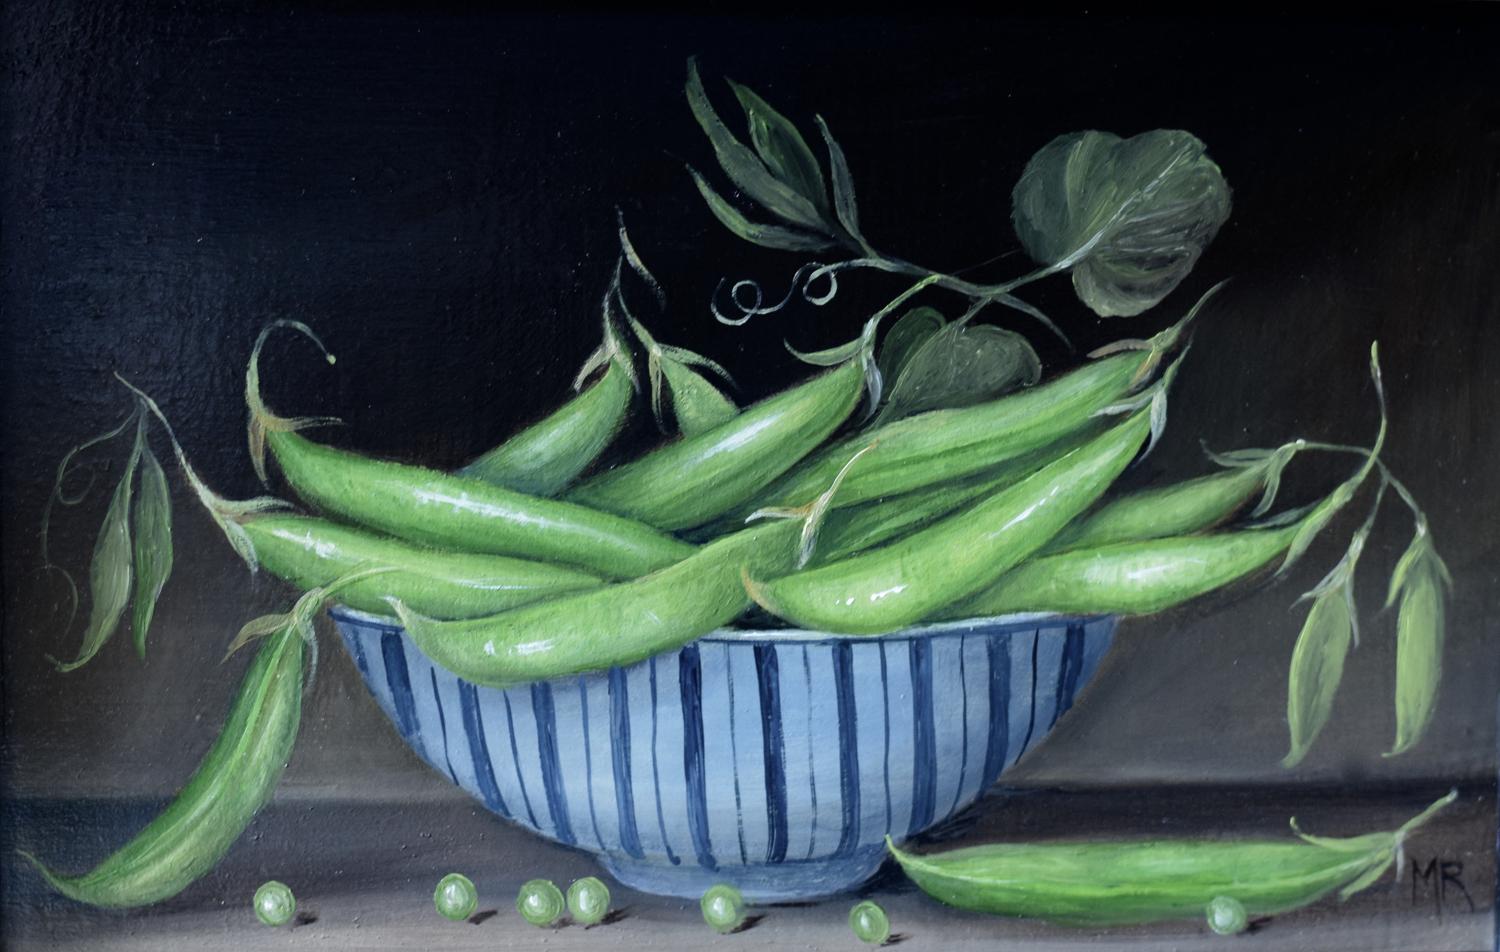 Bowl of peas